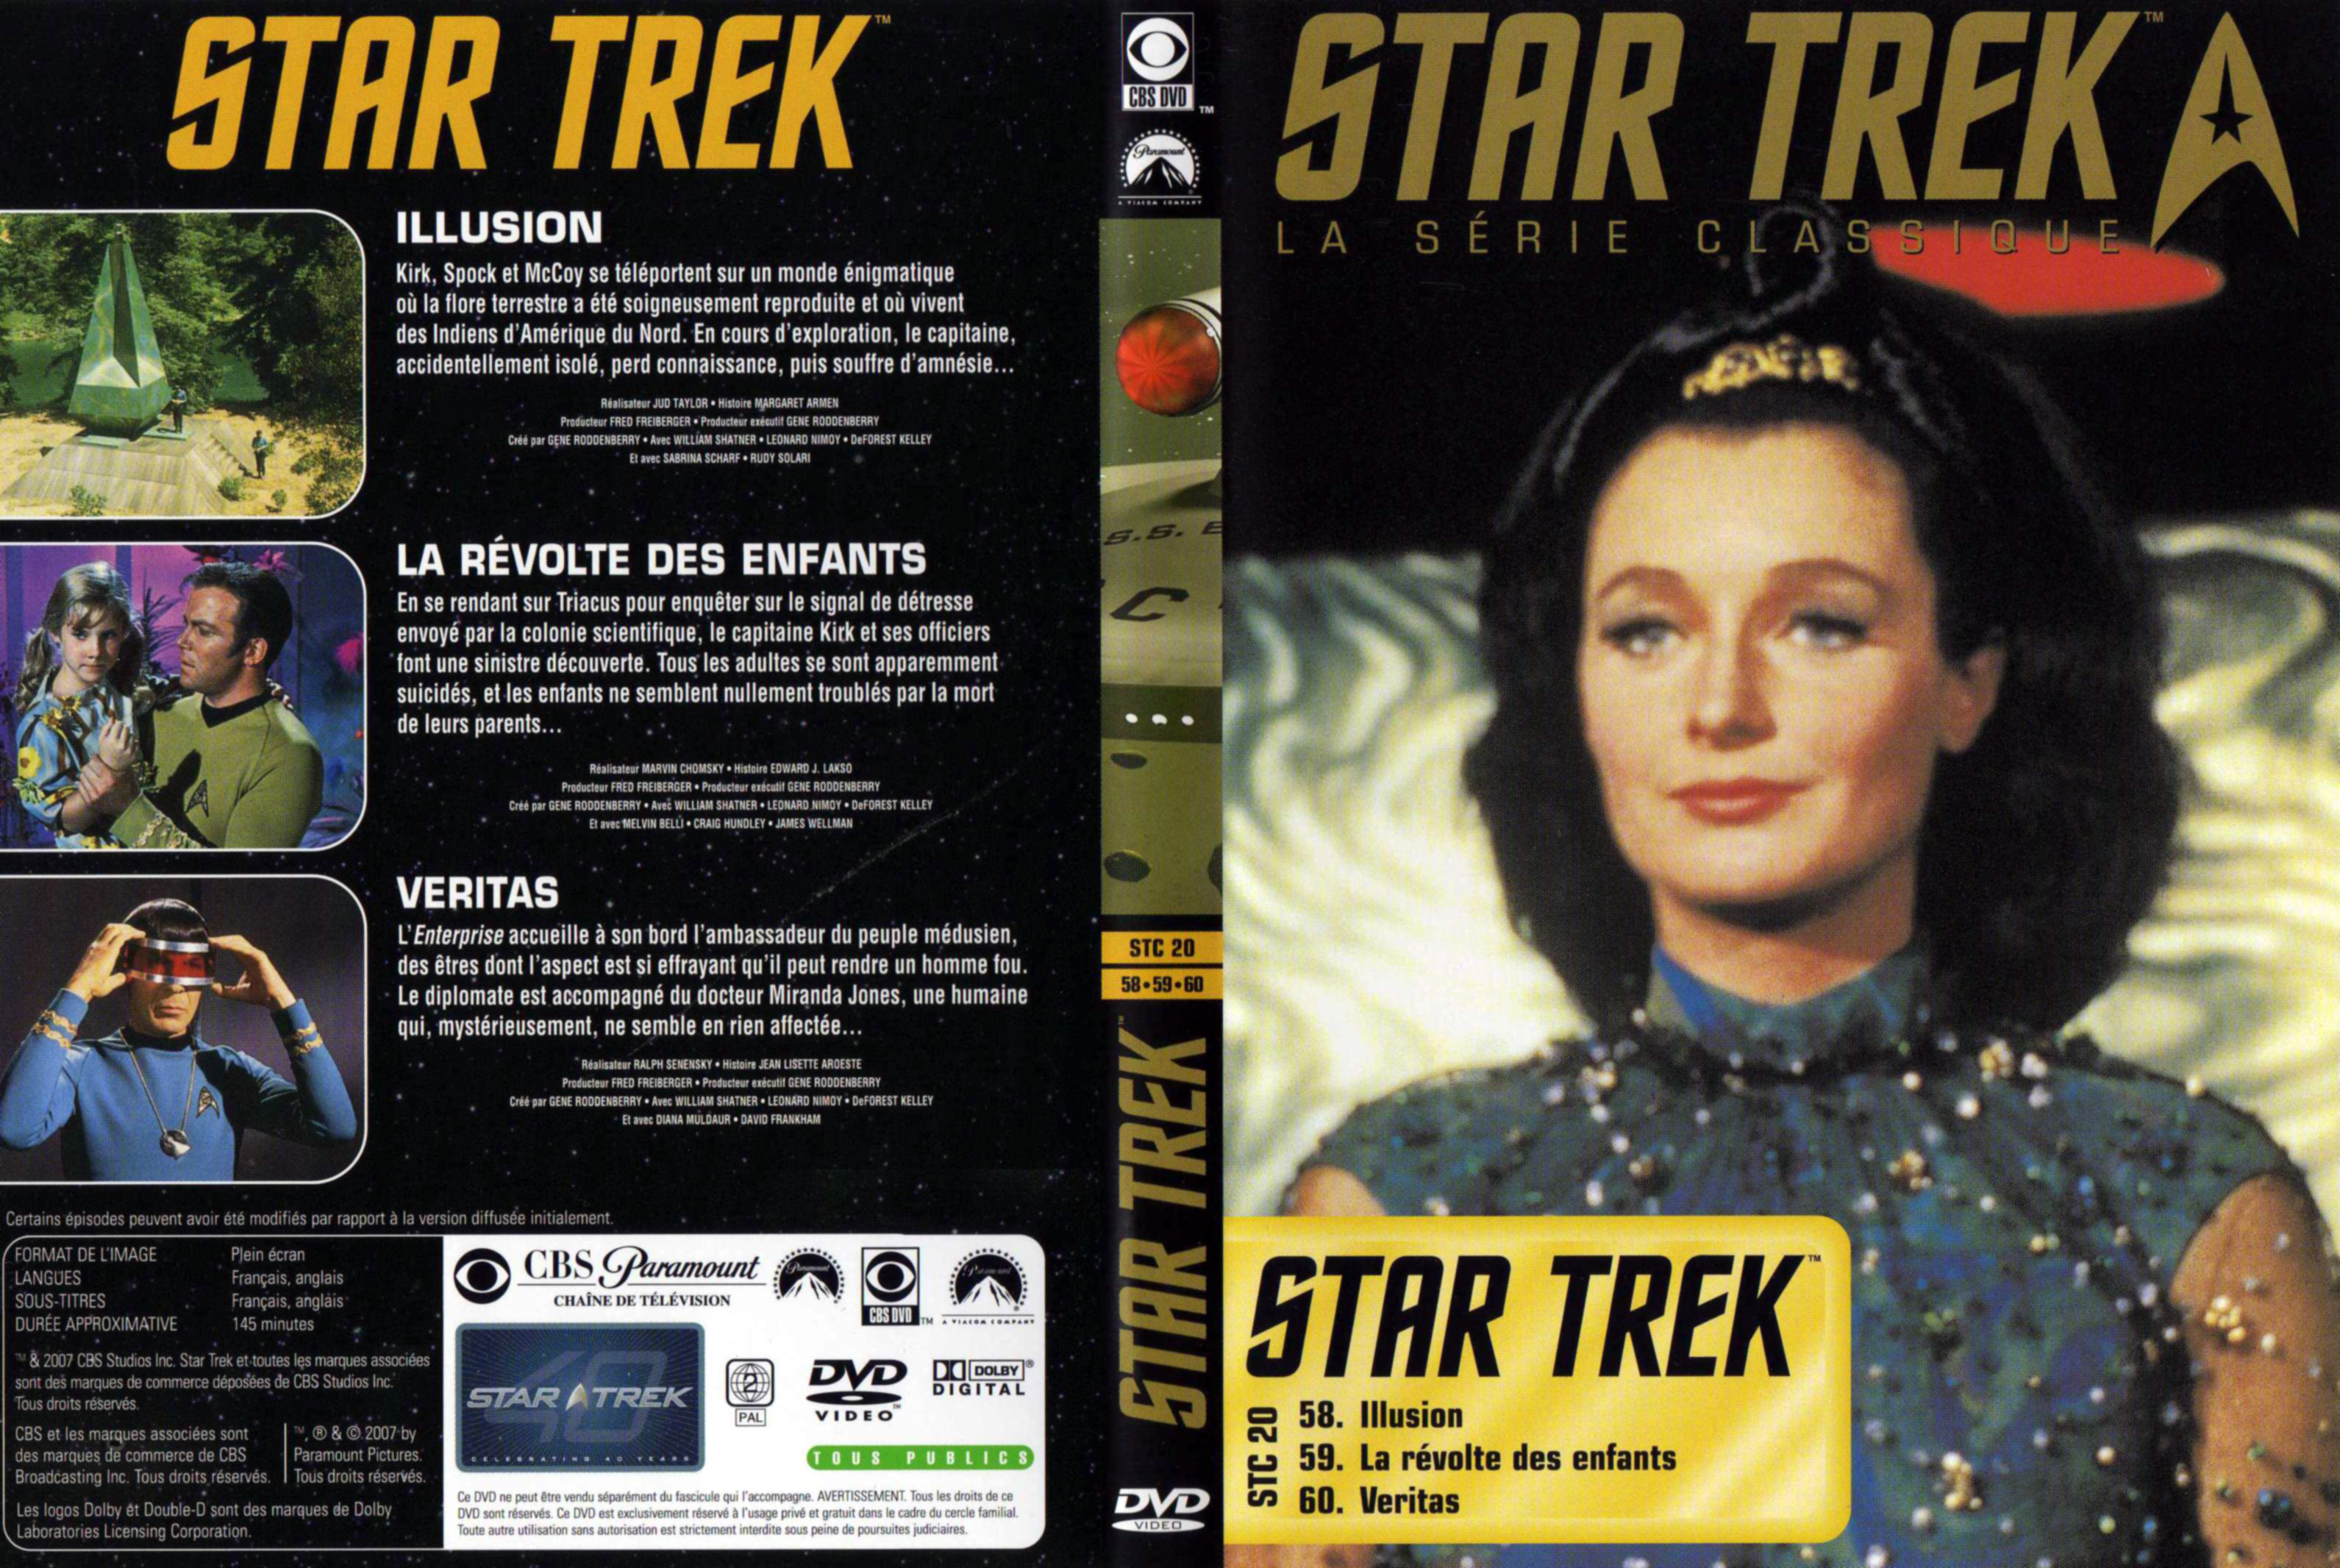 Jaquette DVD Star Trek vol 20